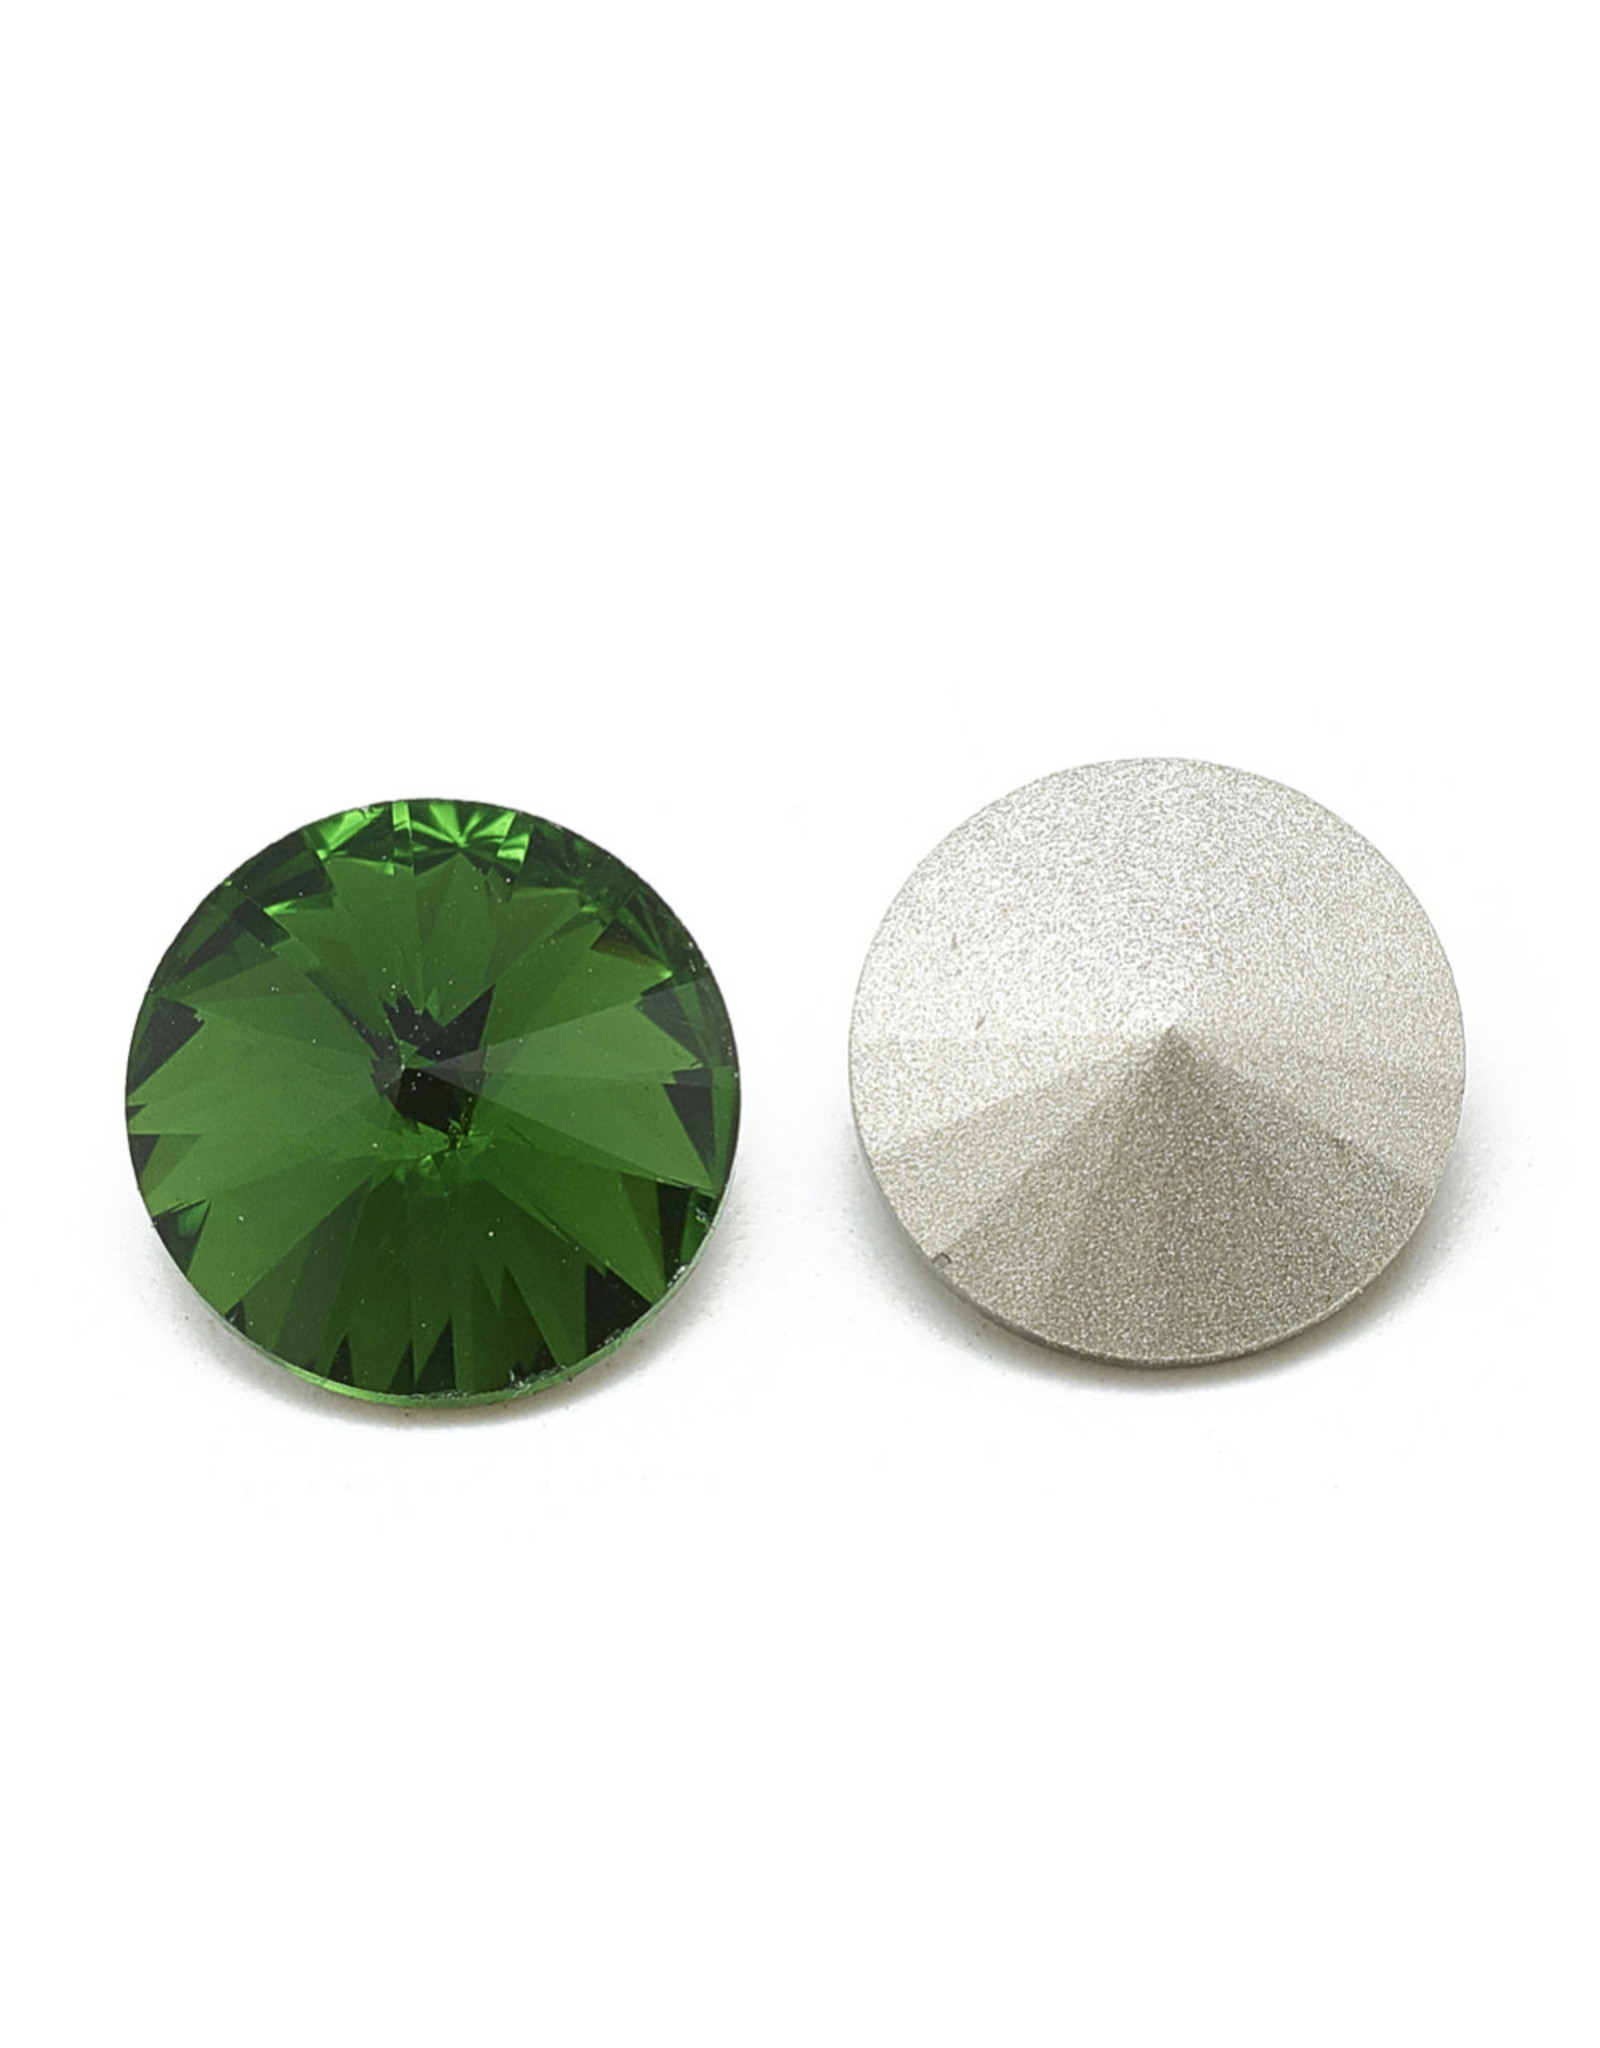 Round Glass Rivoli  16mm Emerald Green  x6